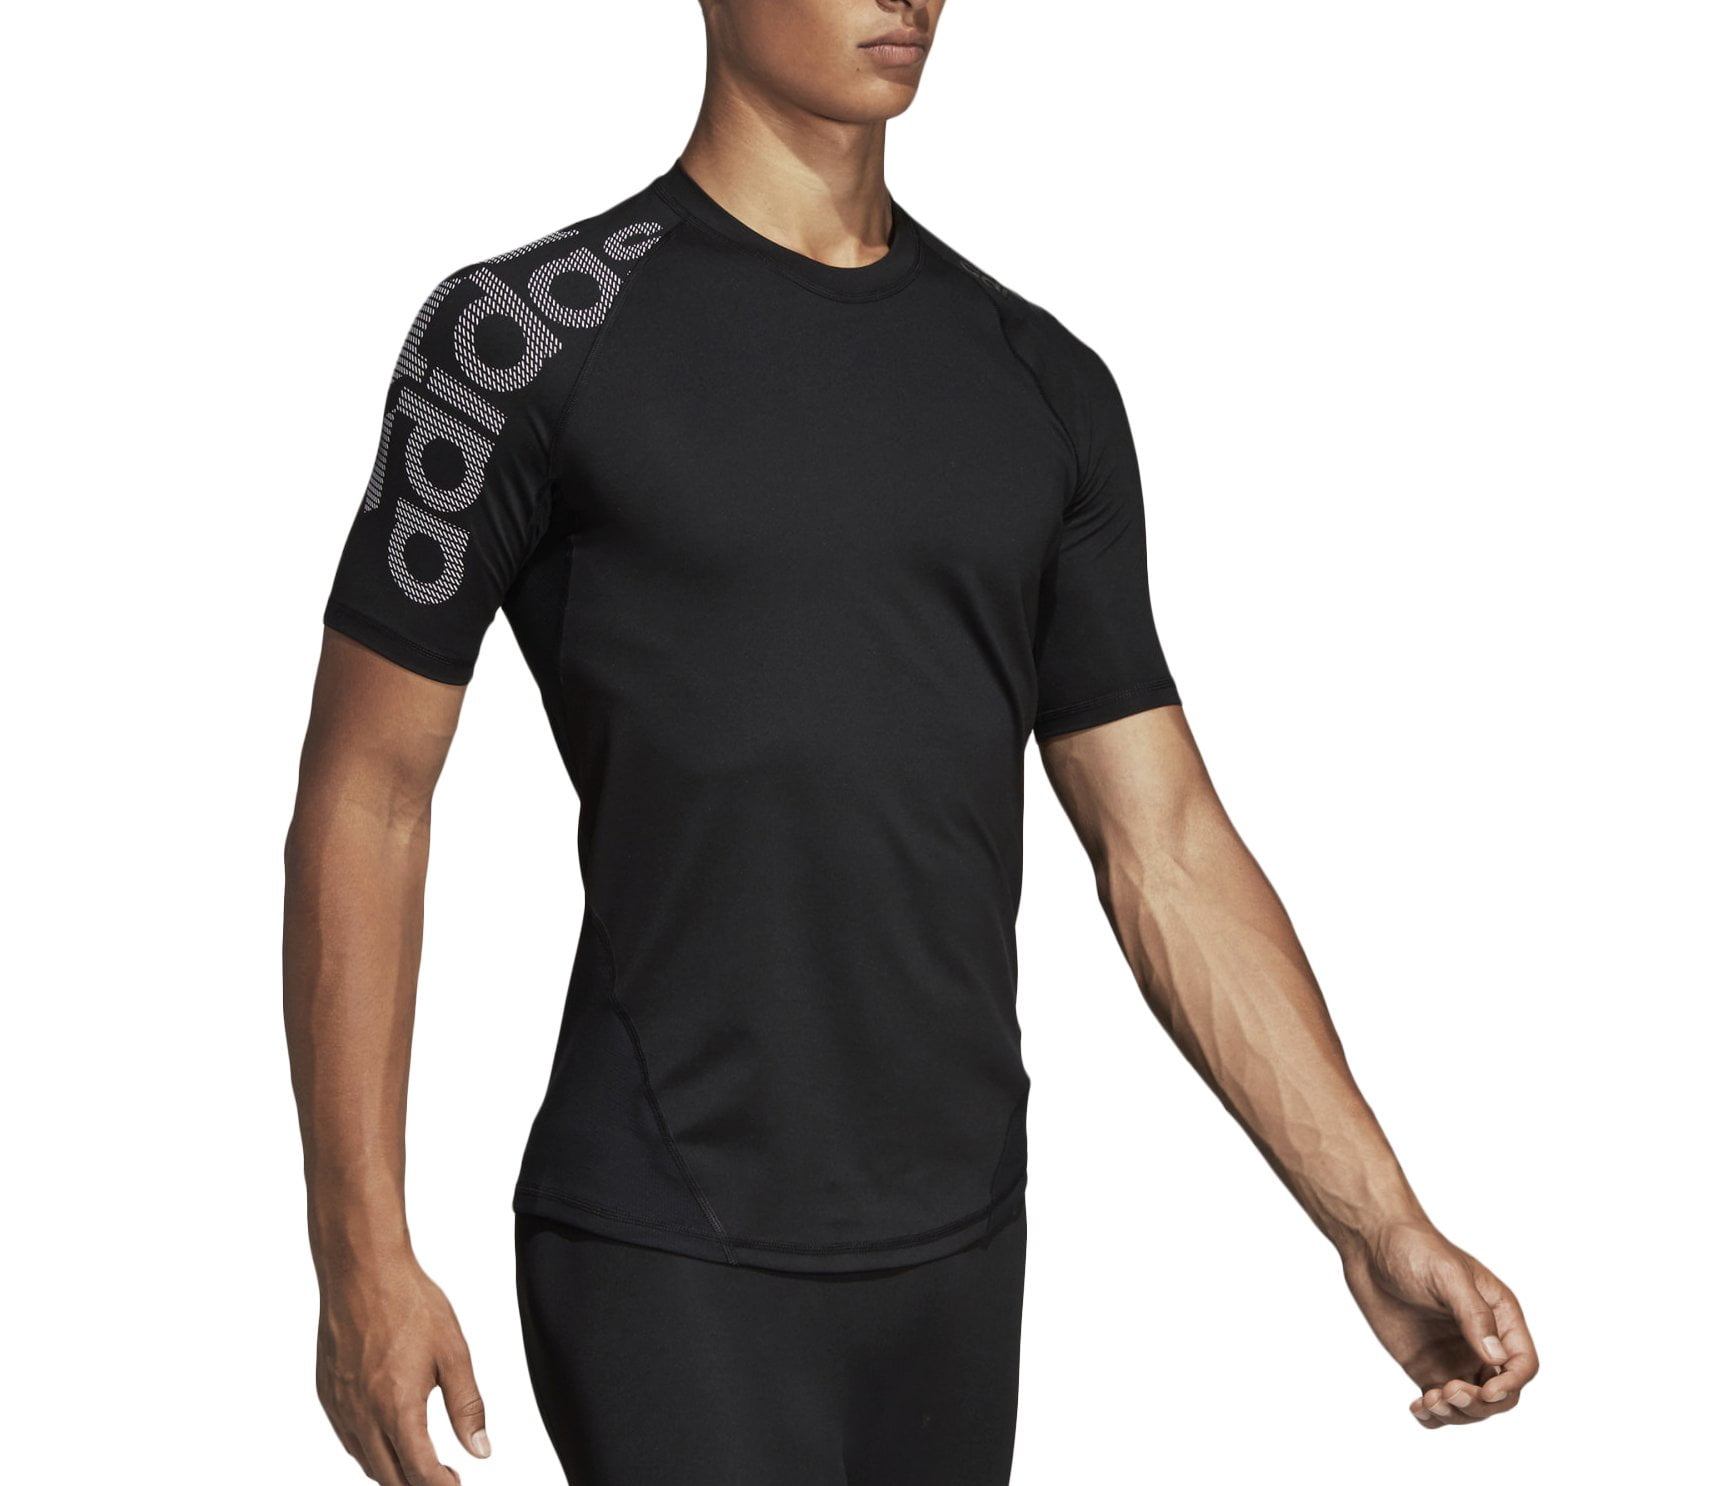 Han Twisted initial Adidas Men's Alphaskin Sport Short Sleeve Badge Of Sport Shirt, Black -  Walmart.com